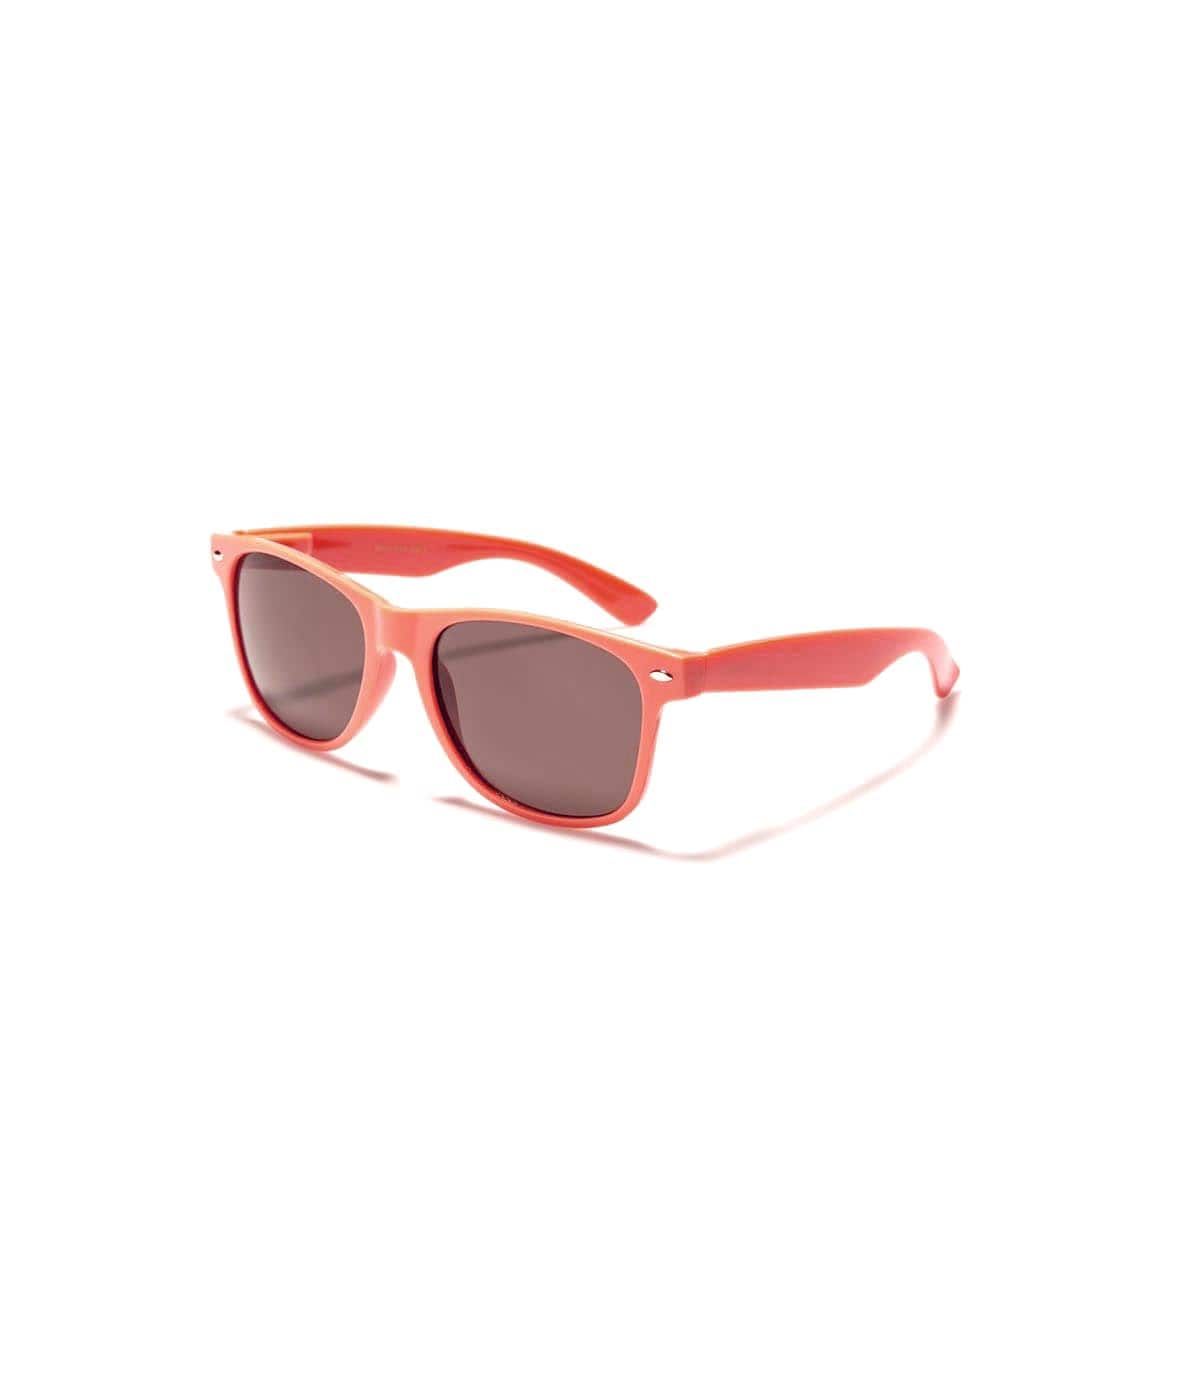 Retro Pastel Sunglasses, Lifetime Guarantee